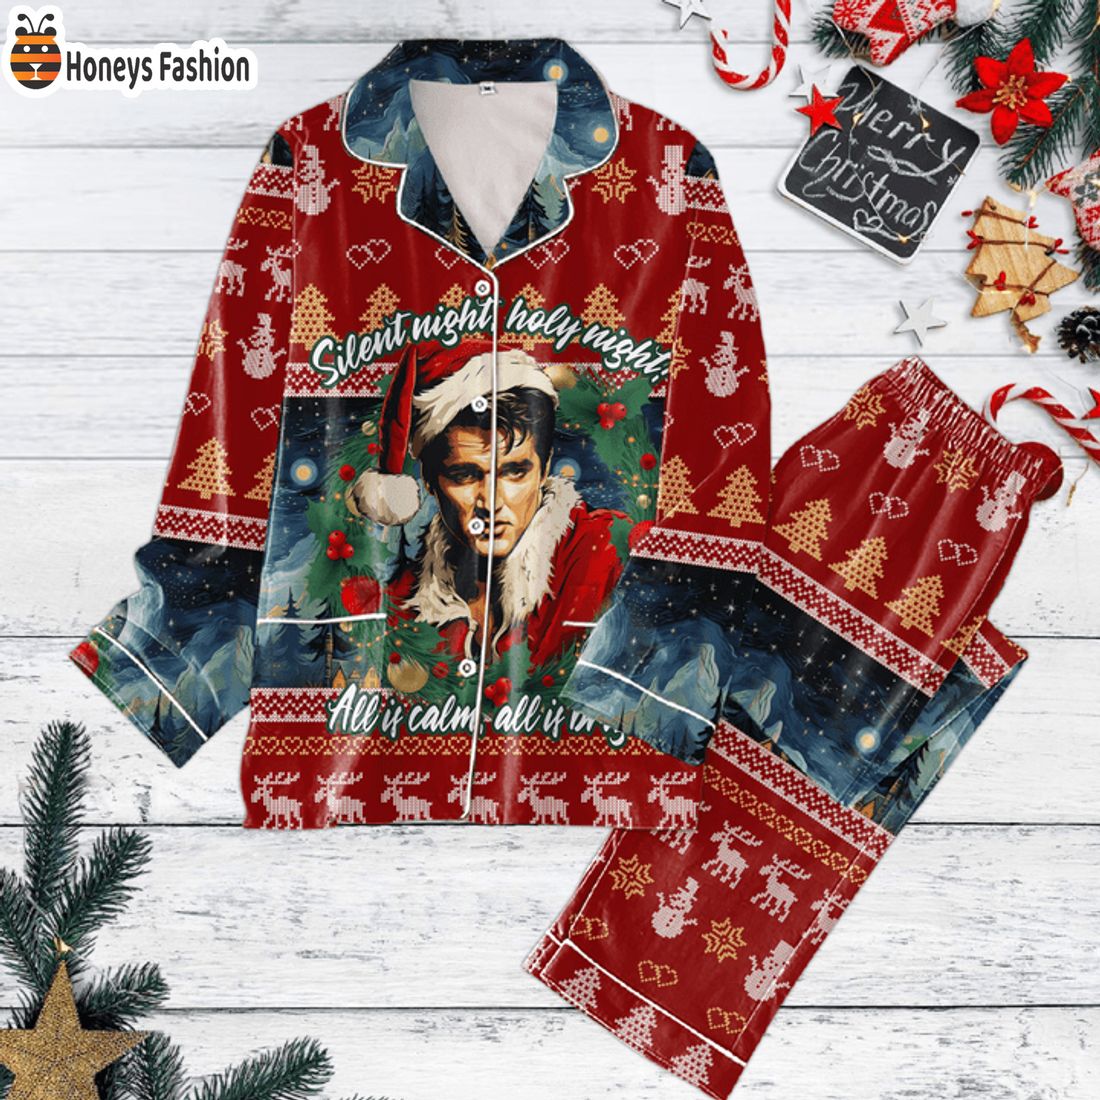 BEST SELLER Elvis Presley Silent Night Holy Night Christmas Pajamas Set